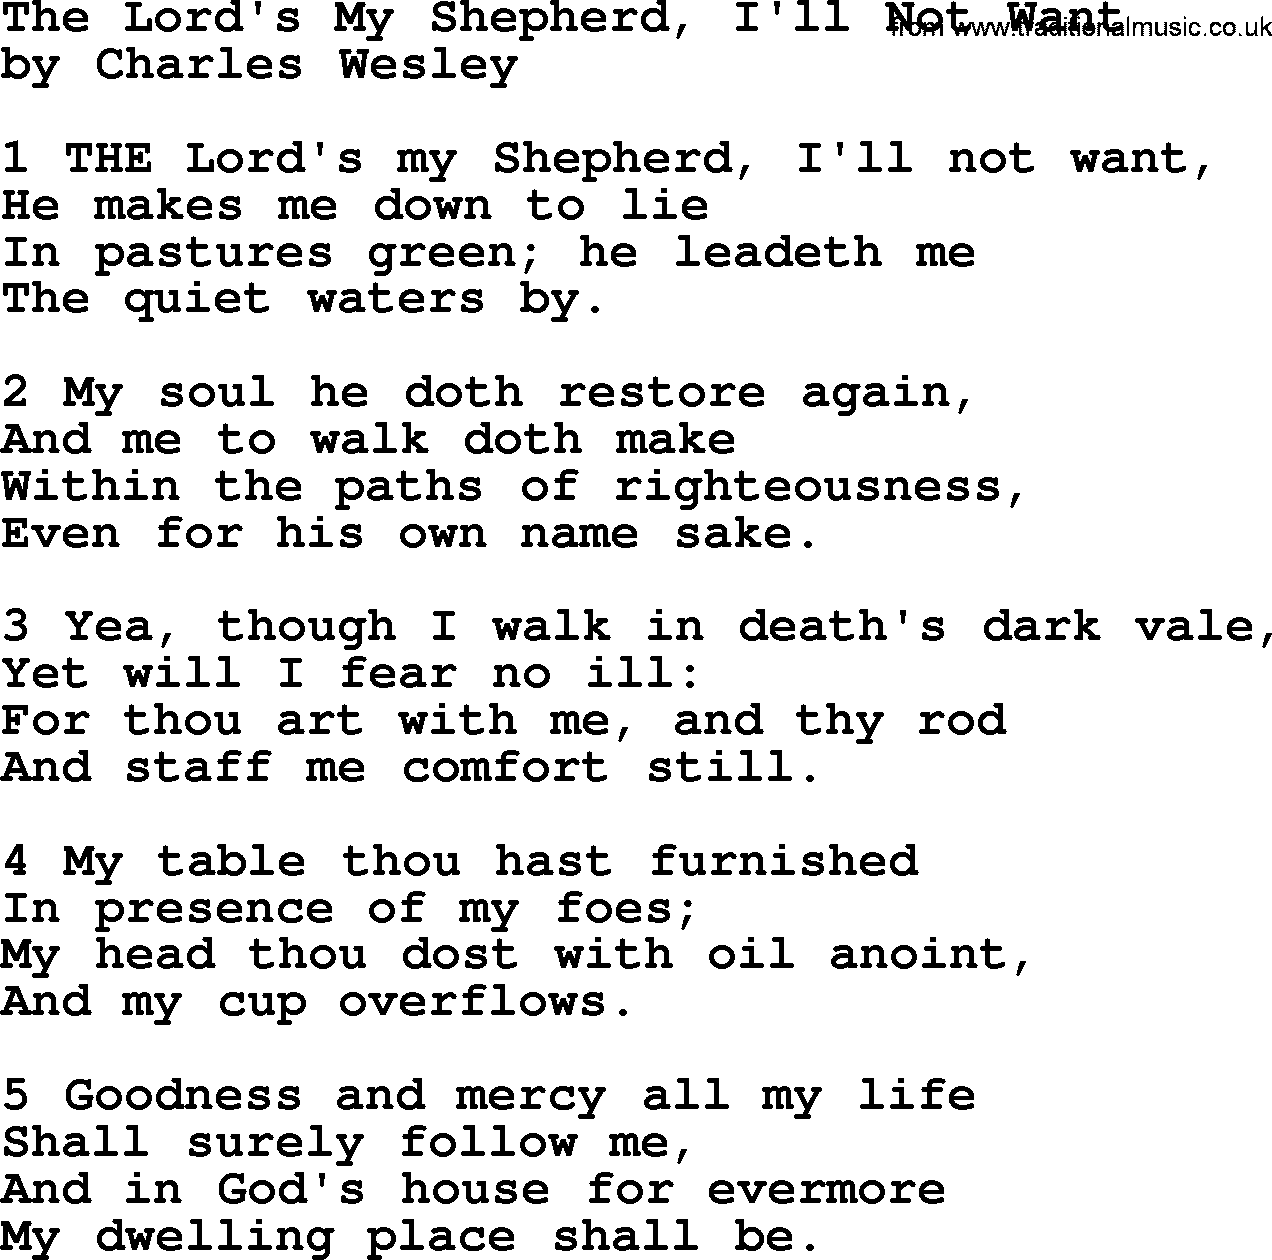 Charles Wesley hymn: The Lord's My Shepherd, I'll Not Want, lyrics